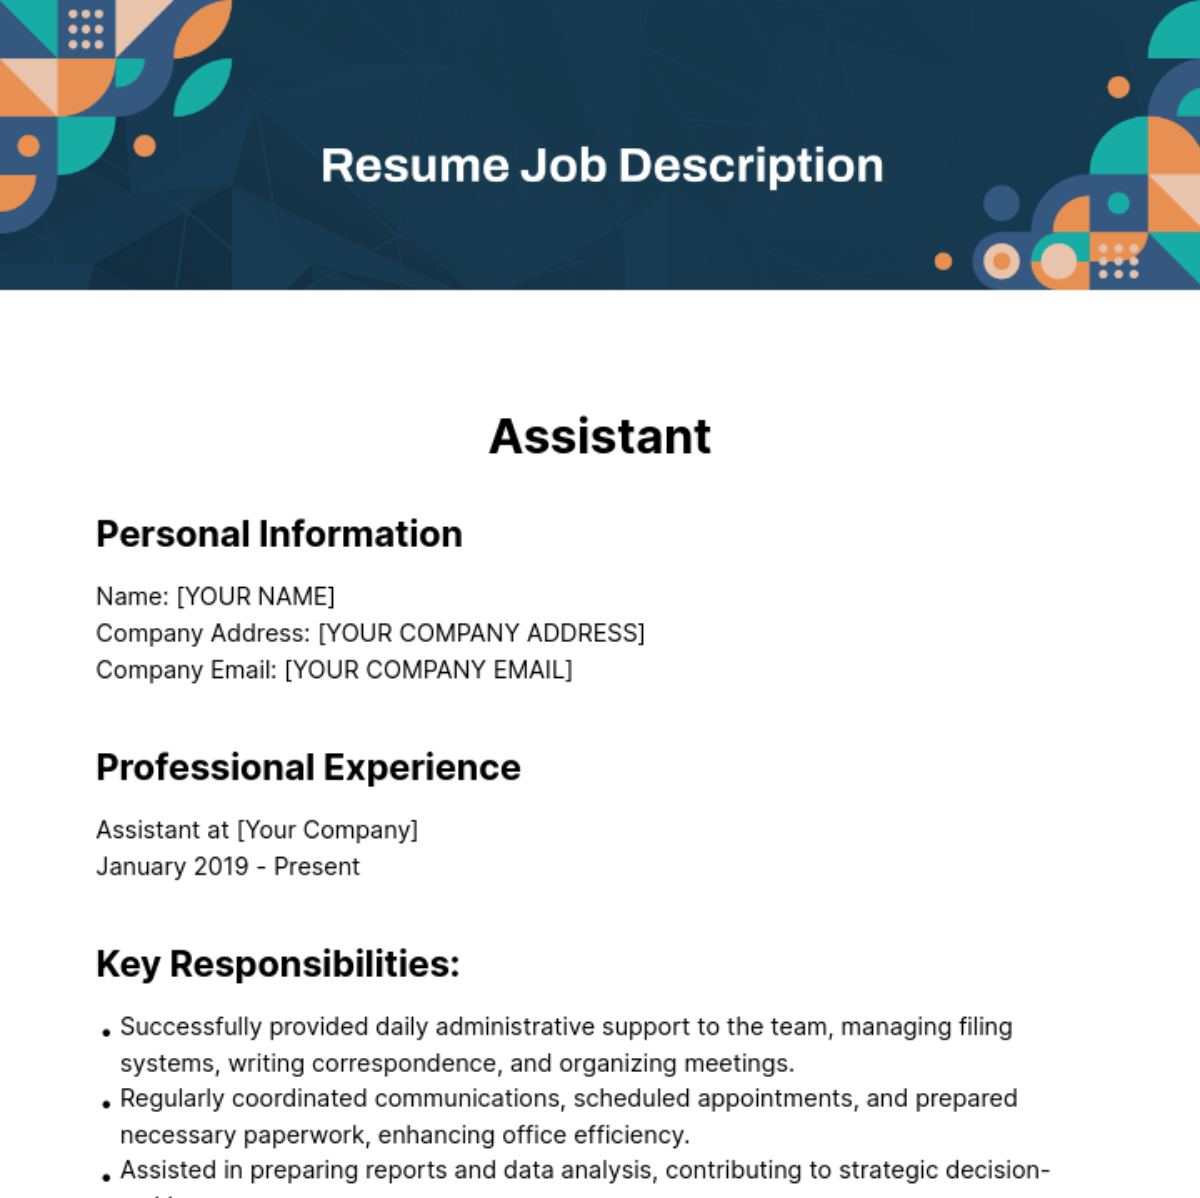 Free Resume Job Description Template